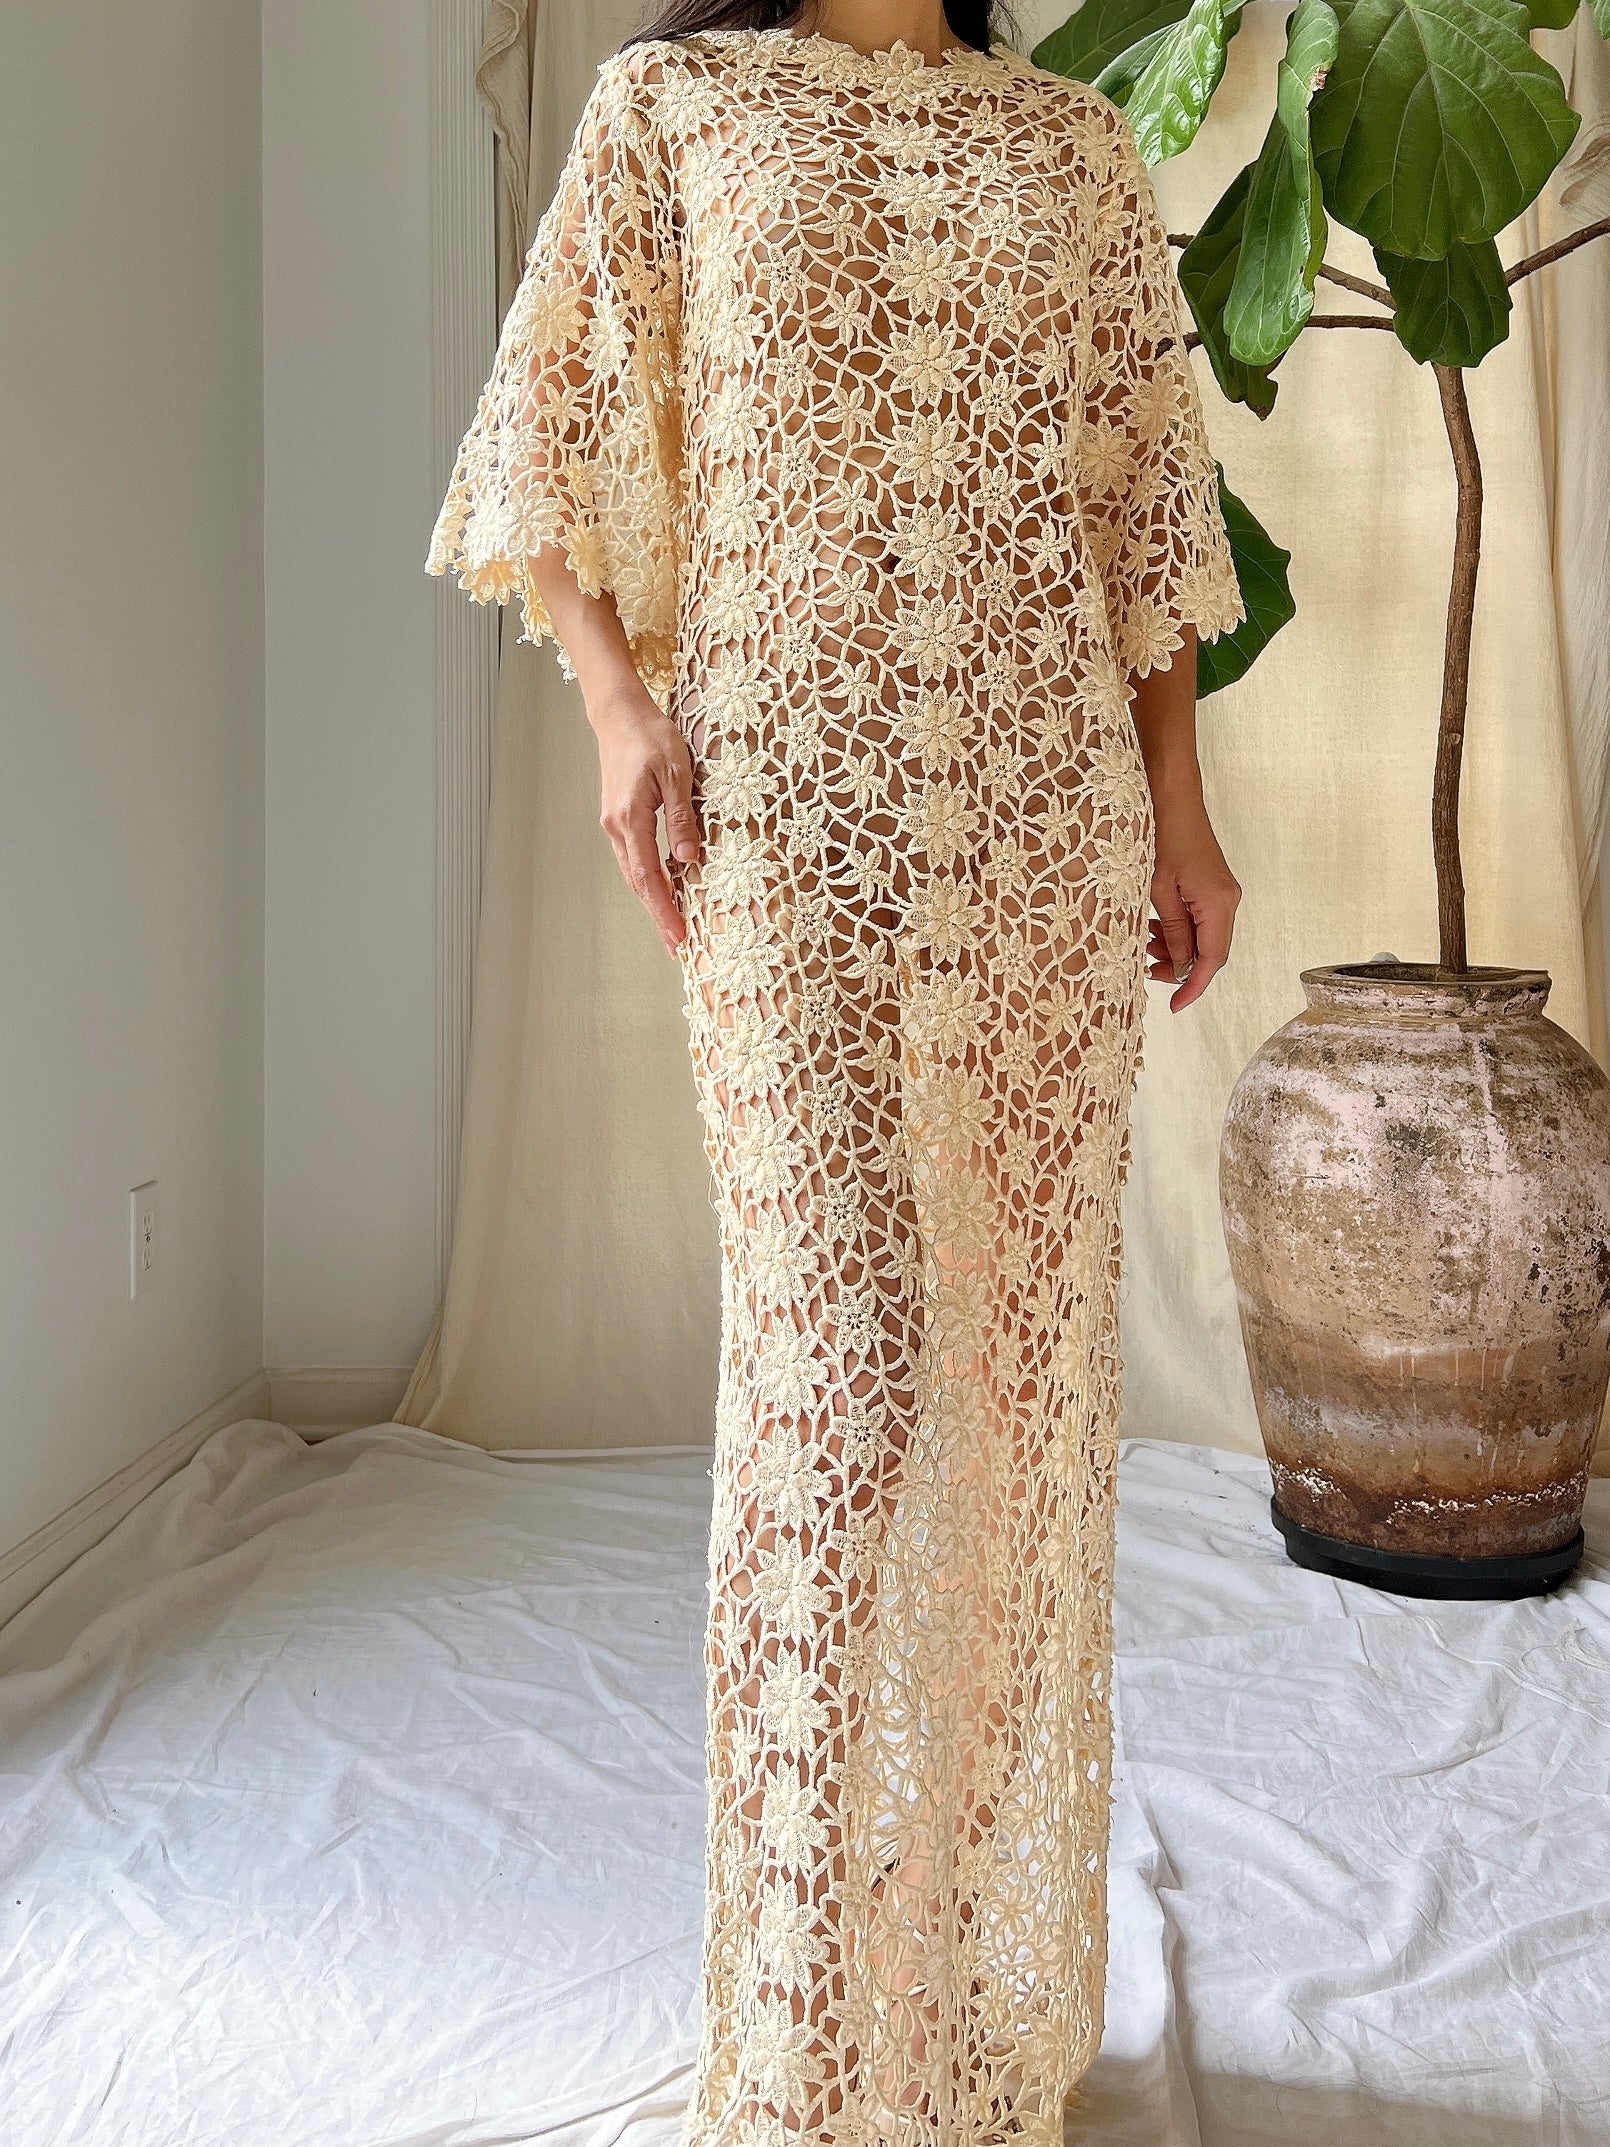 Vintage Crochet Sheer Dress - M